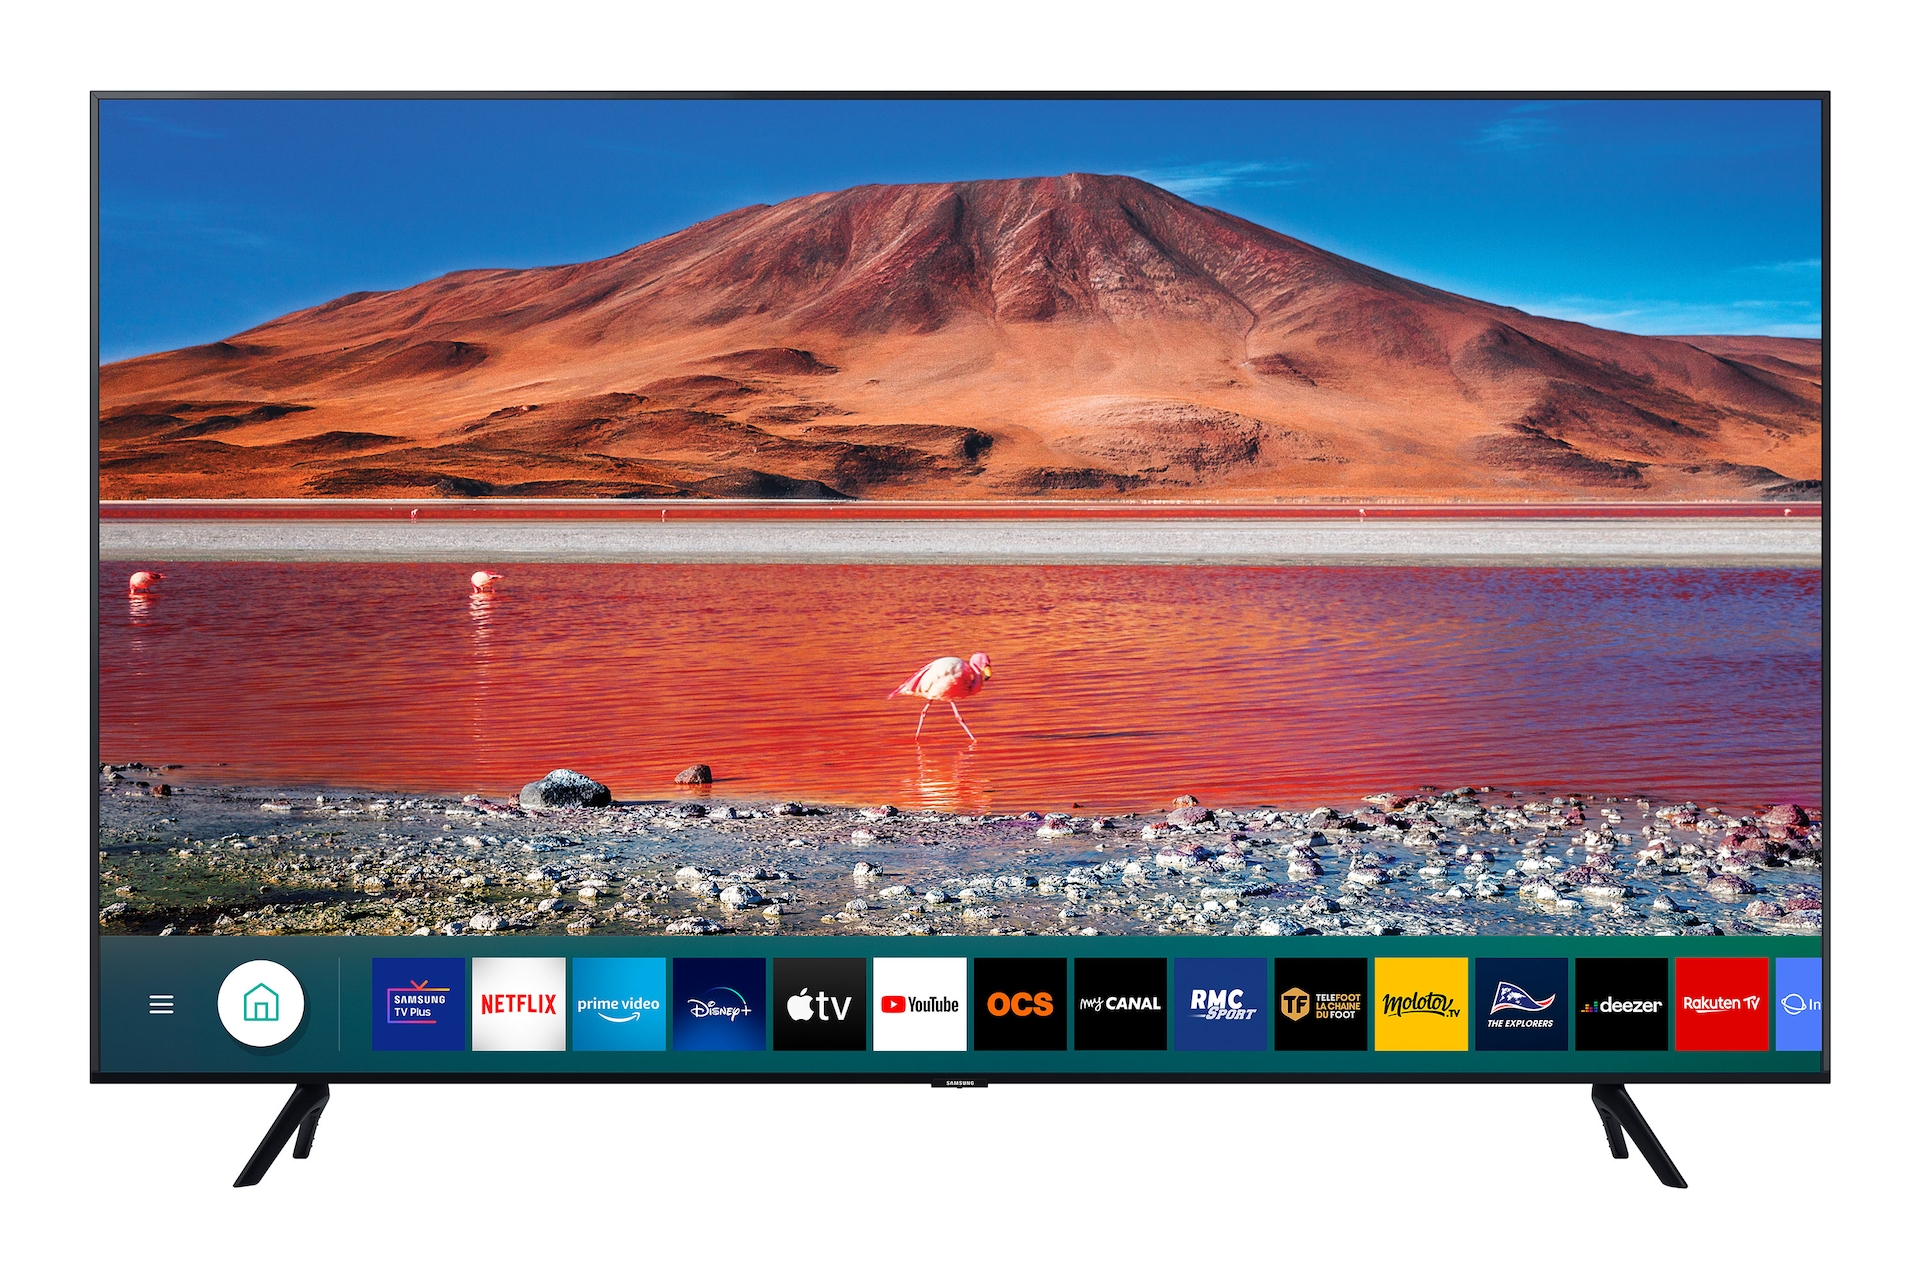 TV 4K Crystal UHD 43'' (108 cm) - 43AU7025 Smart TV - SAMSUNG